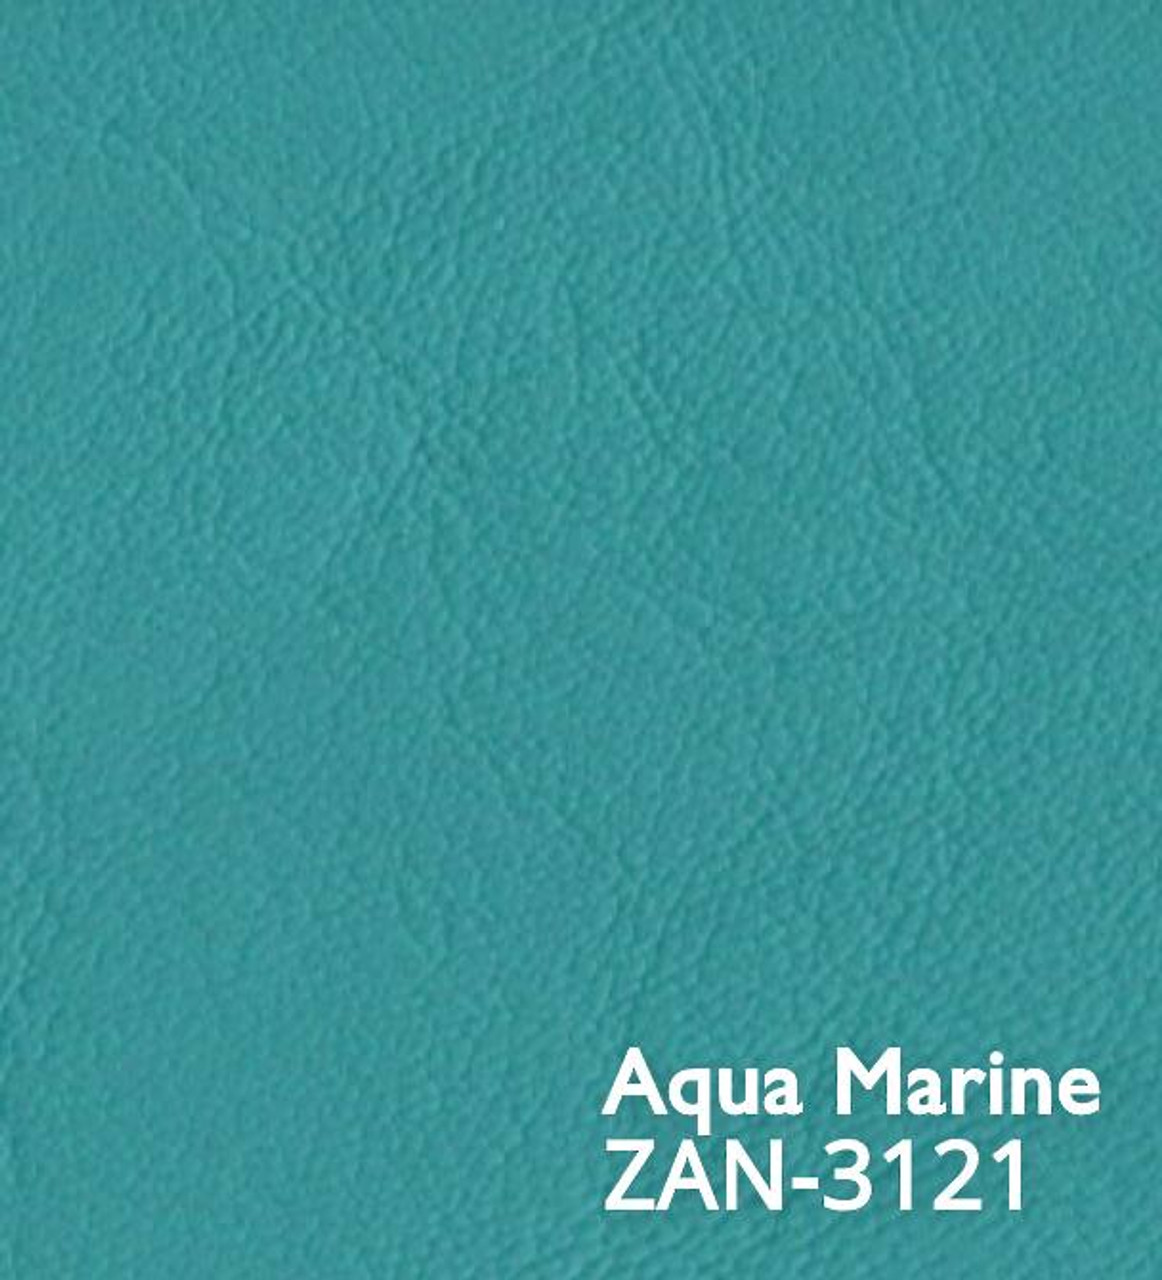 Light Blue, Solid Marine Grade Vinyl By The Yard